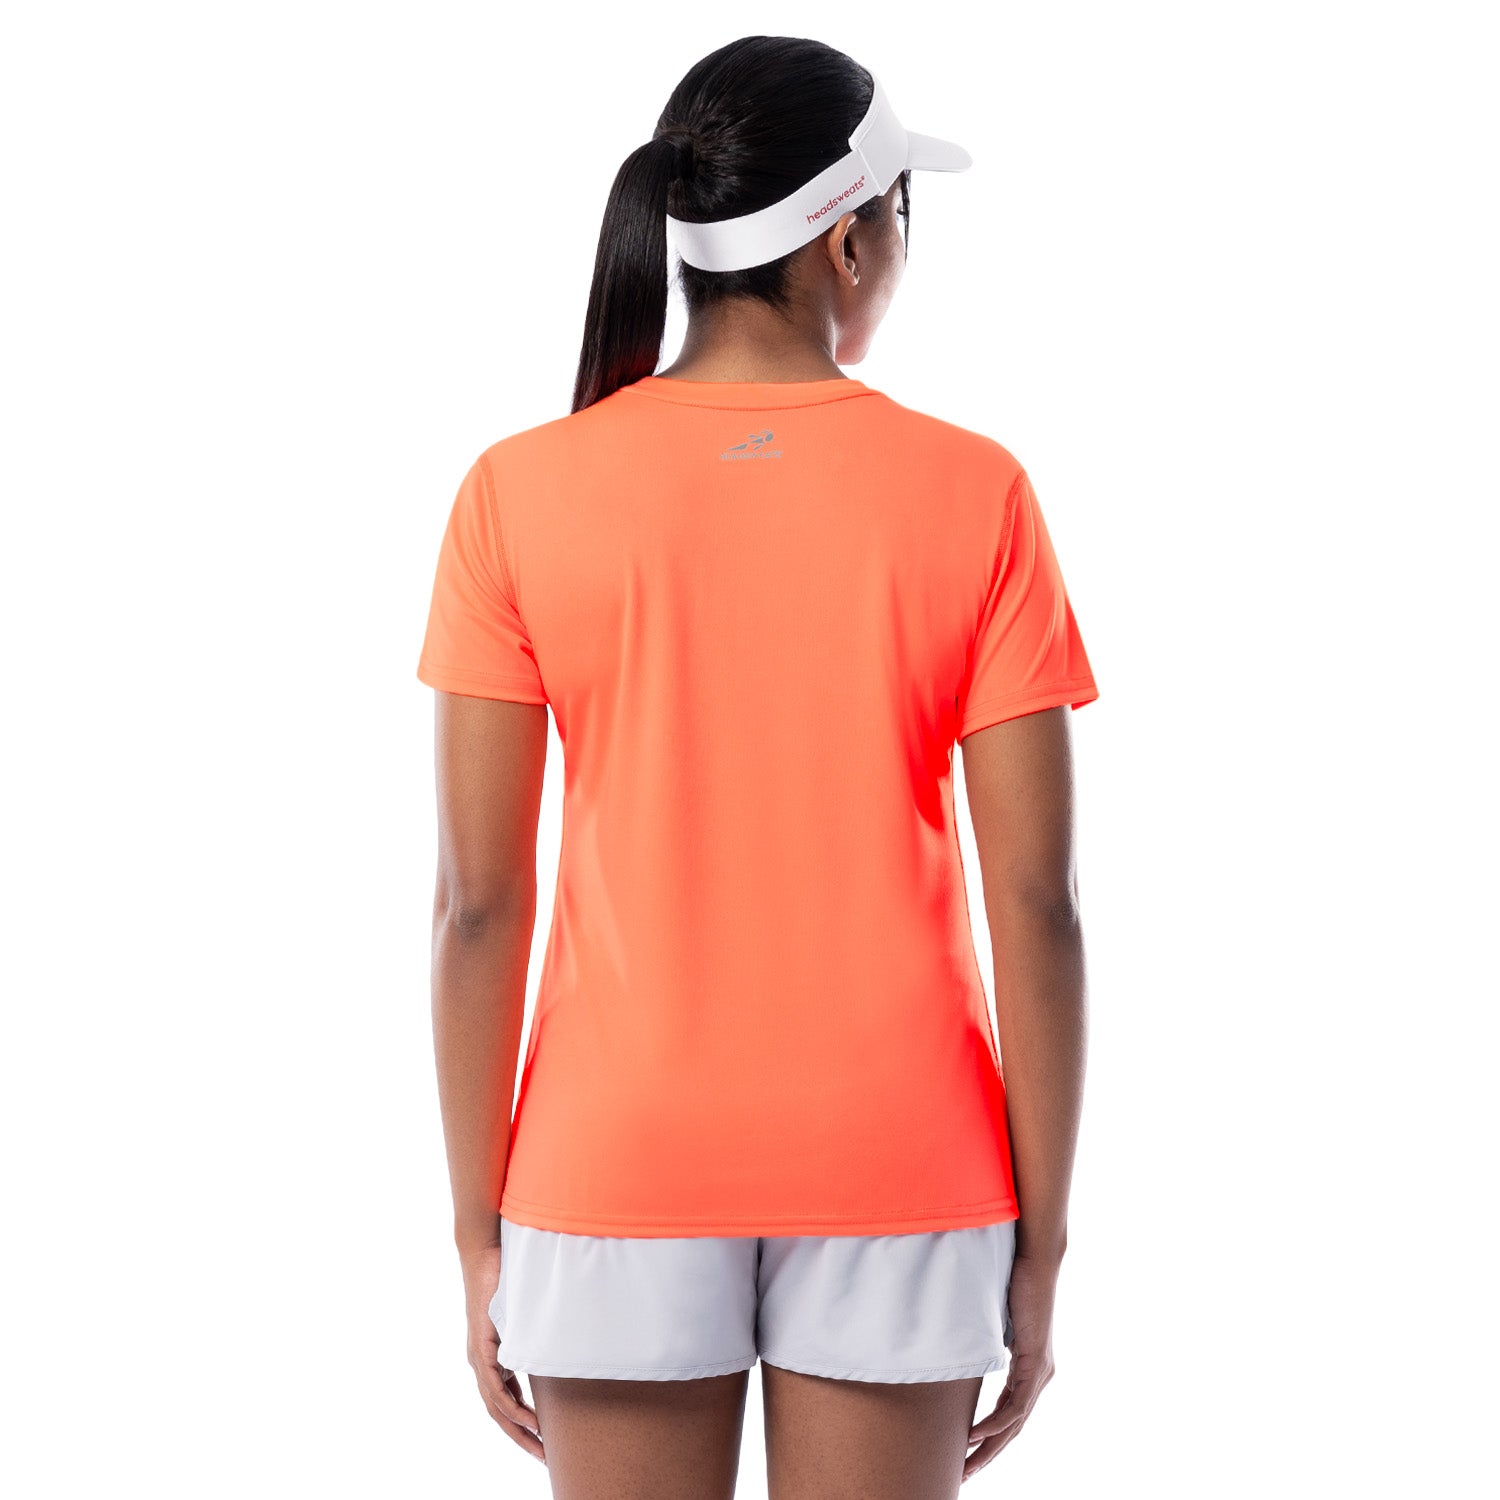 Women's Orange Training T-Shirt Back View